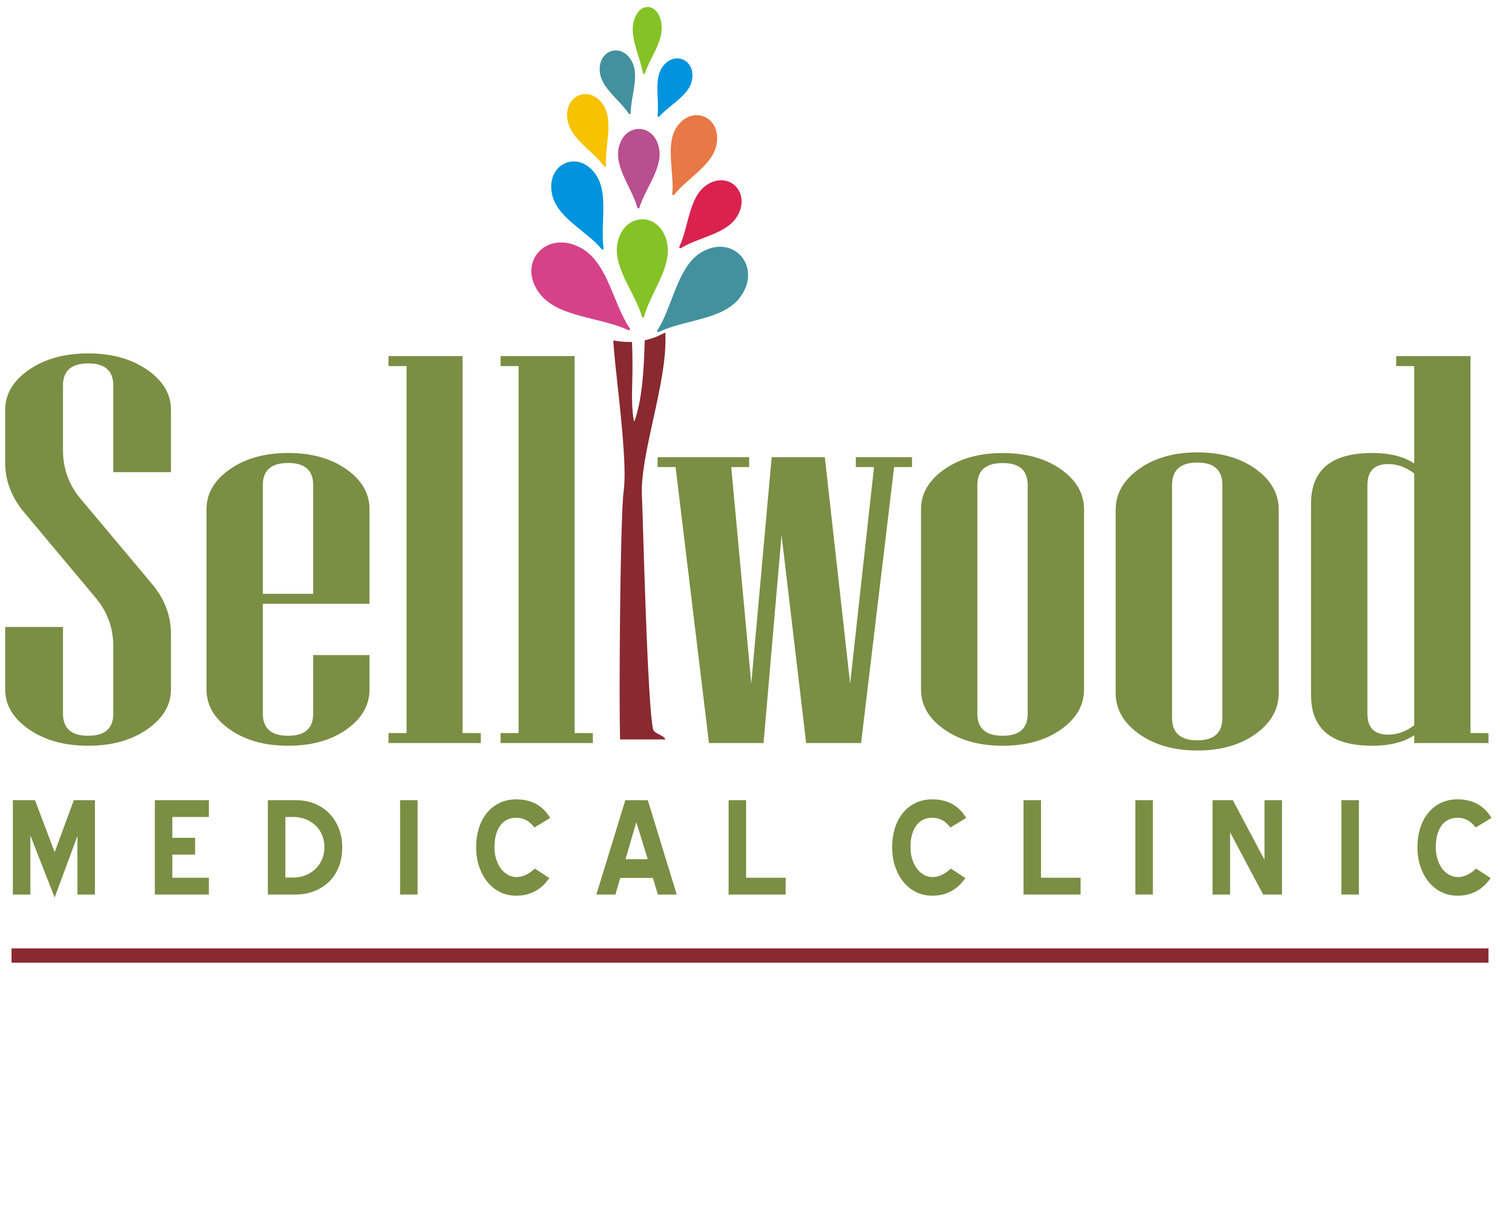 Sellwood Medical Clinic